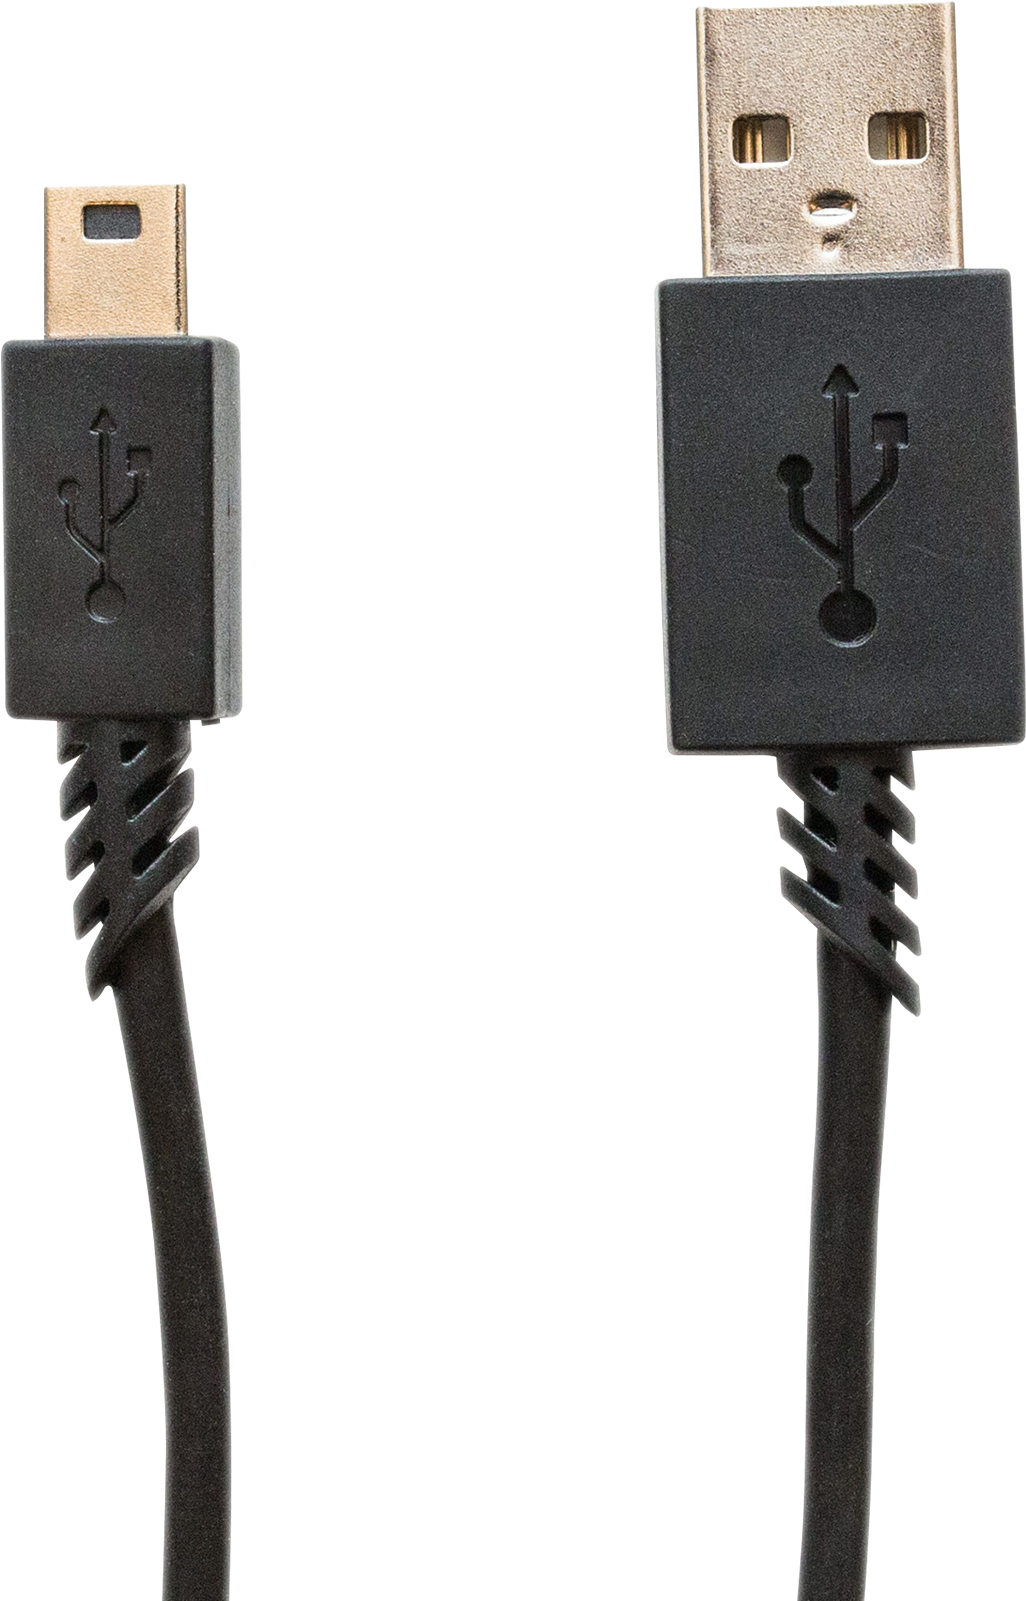 U S B Cable Connectors PNG image